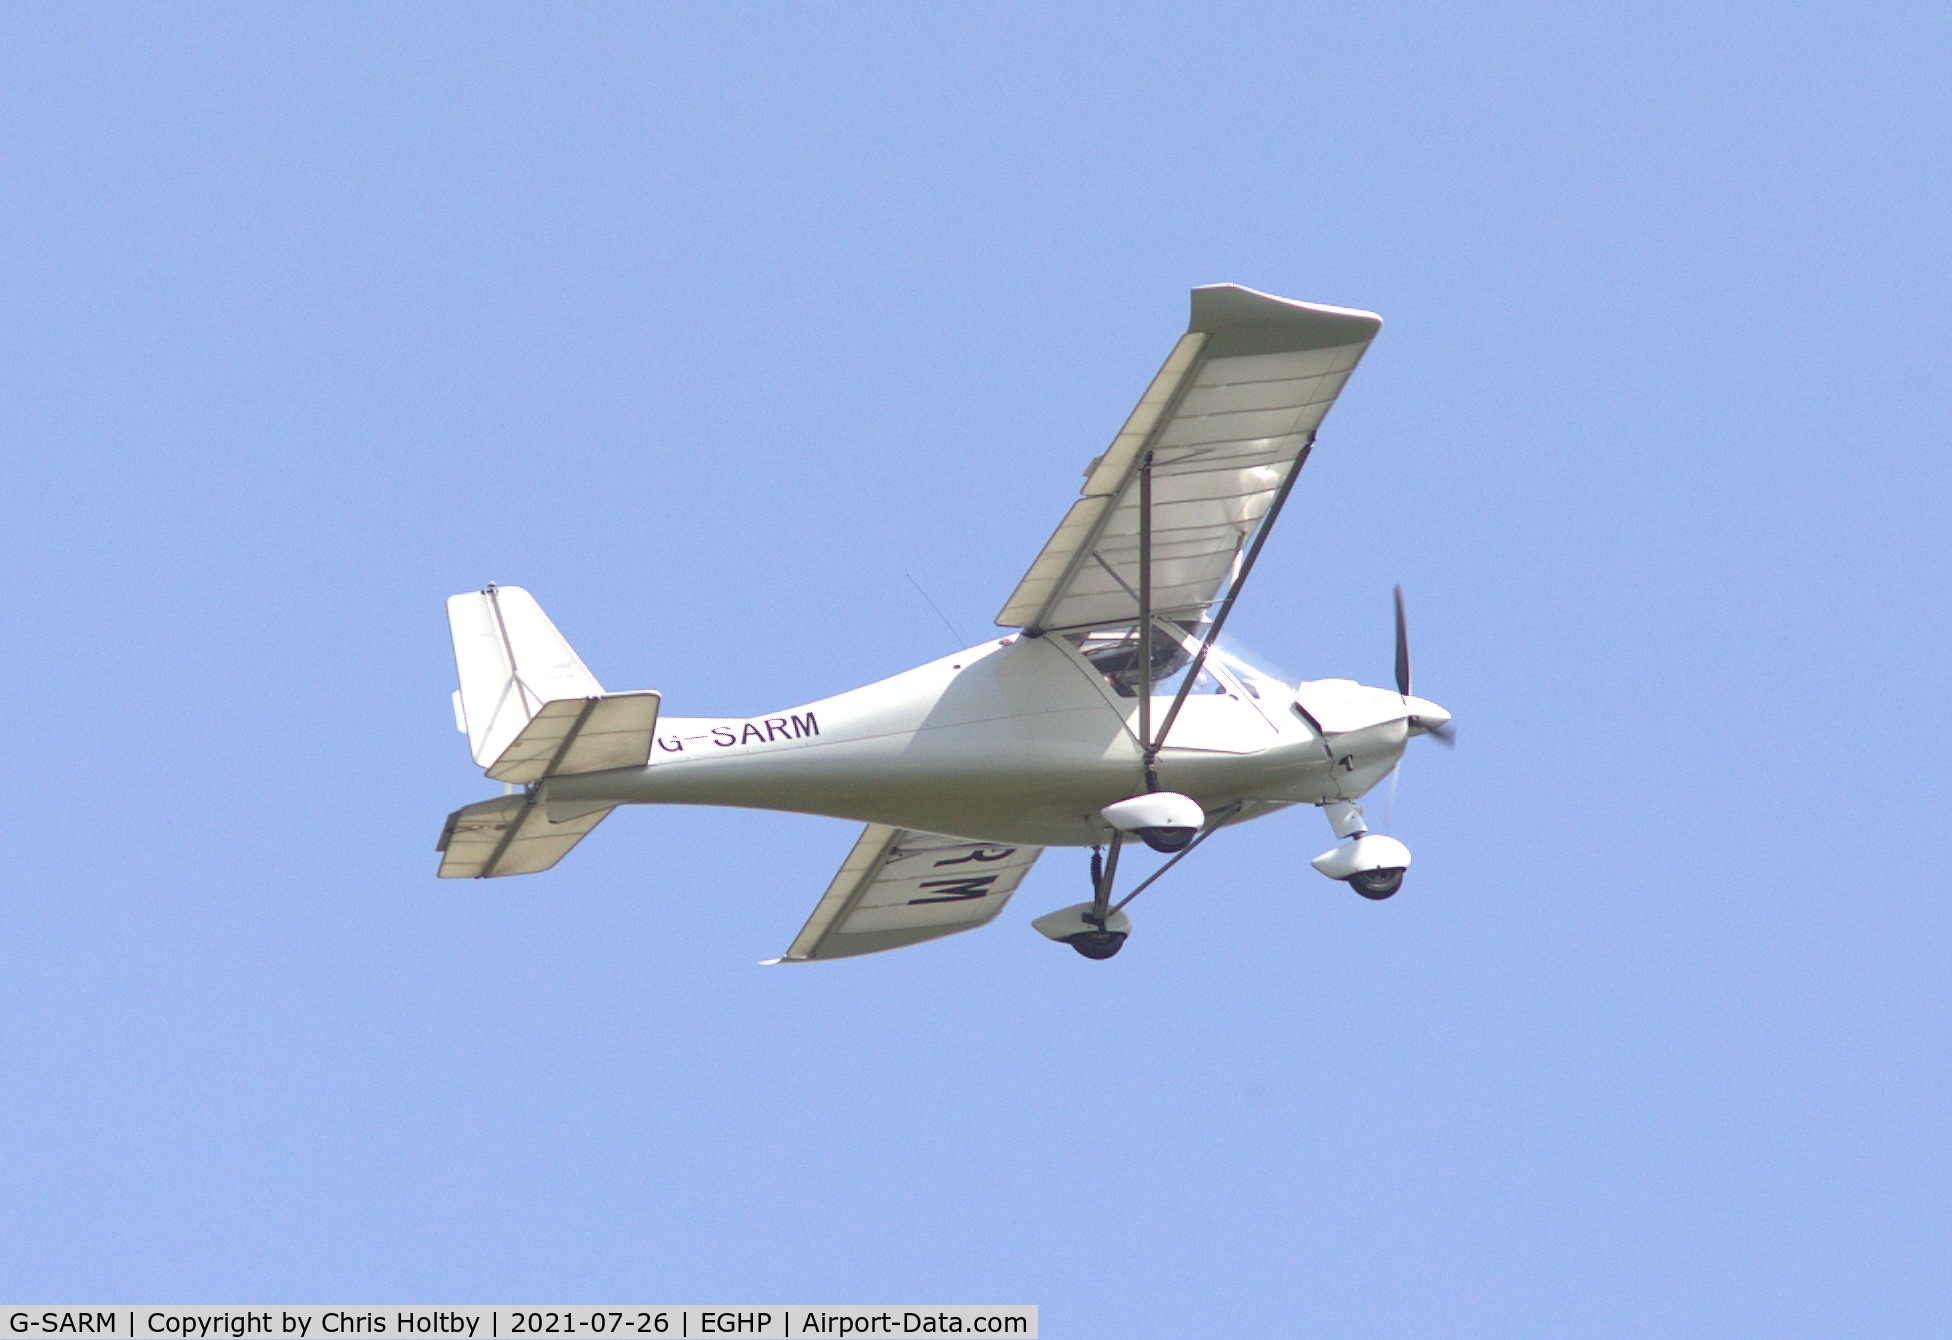 G-SARM, 2005 Comco Ikarus C42 FB100 C/N 0504-6674, Taken off from Popham Airfield